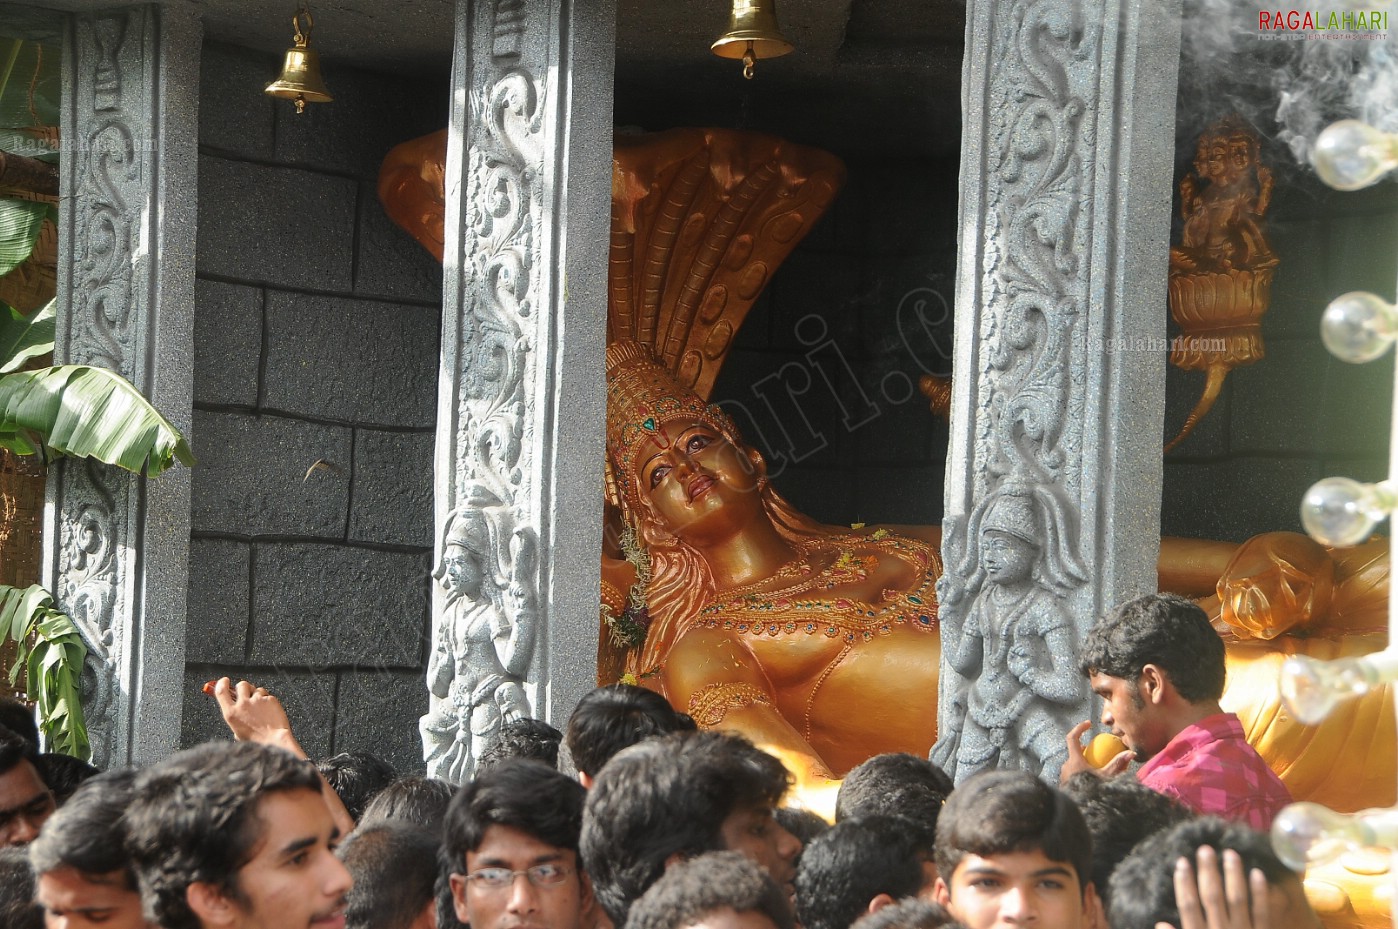 Khairatabad Ganesh Idols 2011 (Posters)